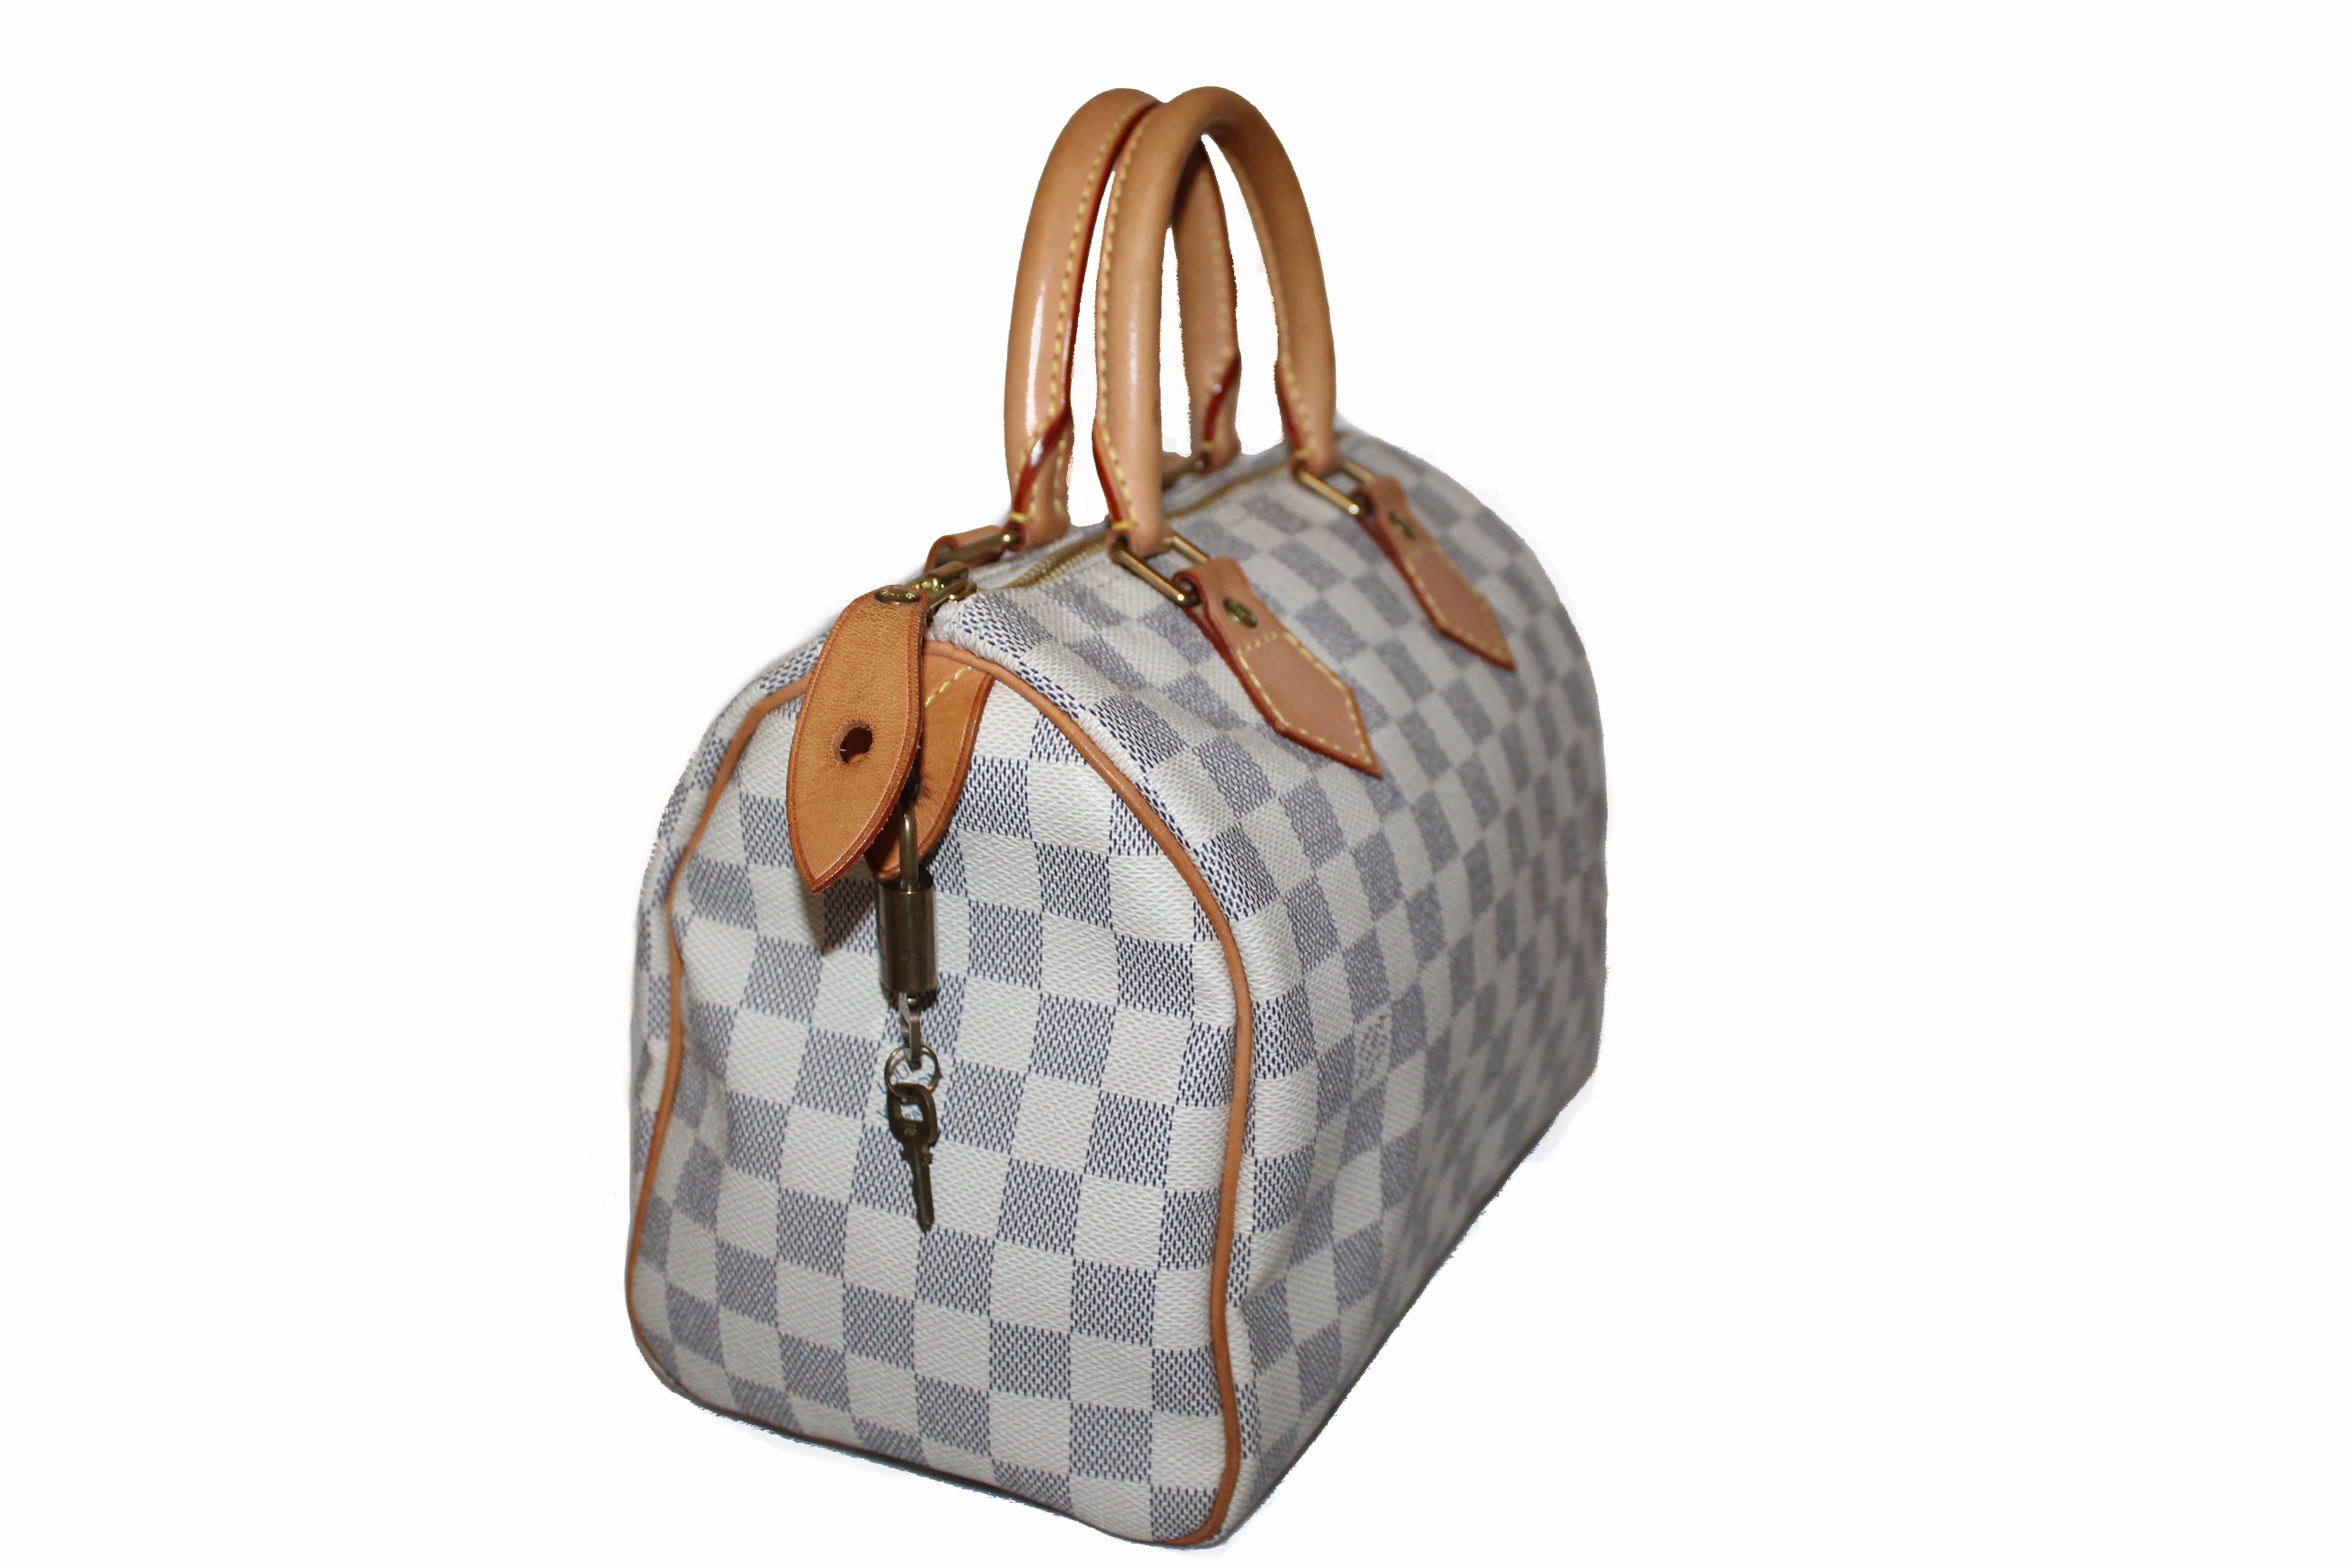 Authentic Louis Vuitton Damier Azur Speedy 25 Hand Bag